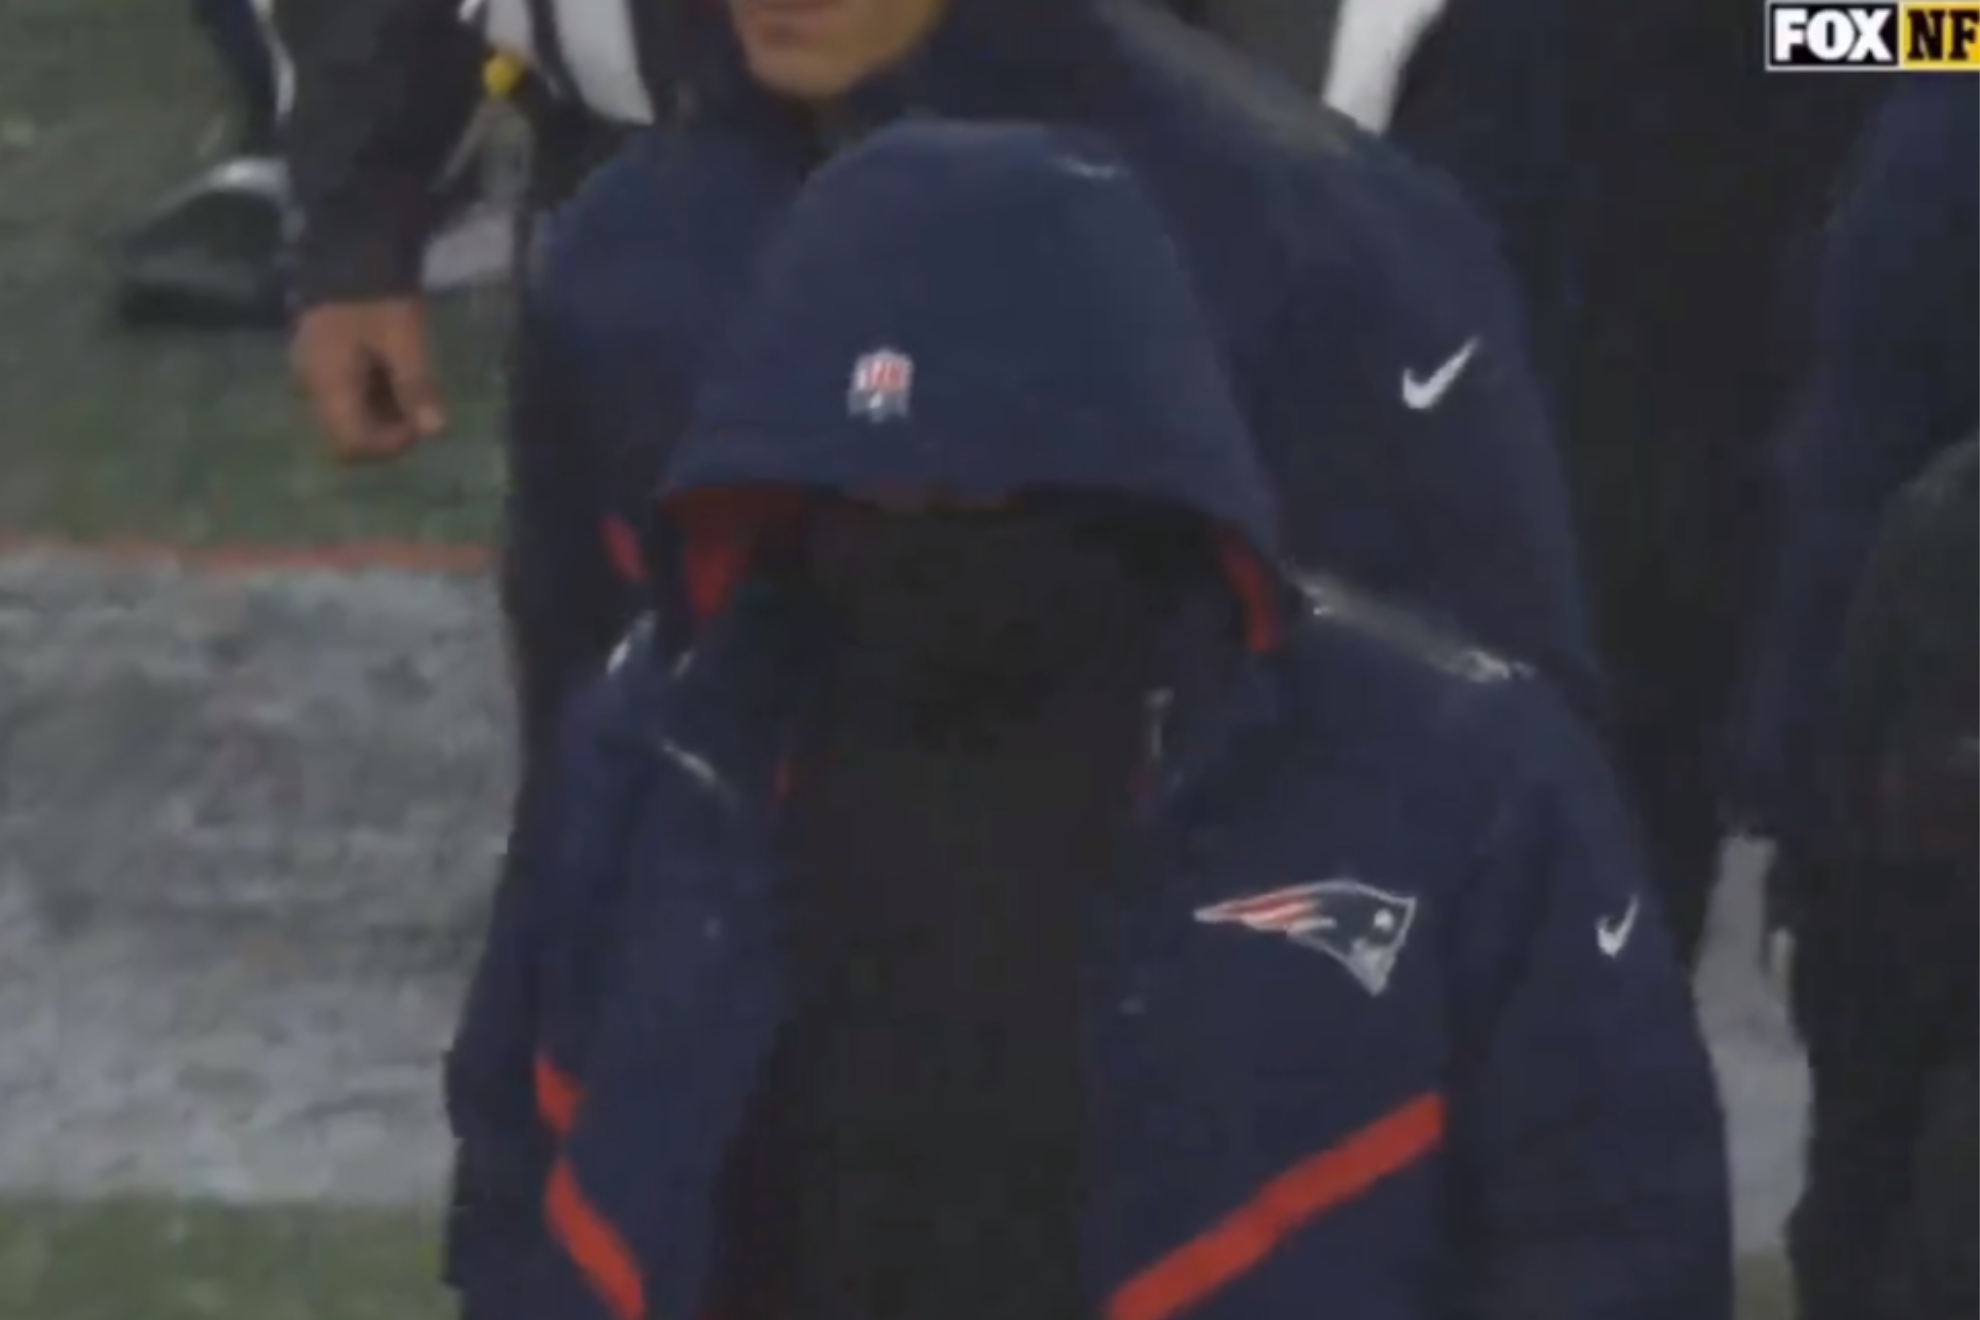 Belichicks face is obscured from view as he walks toward Jets coach Robert Saleh.